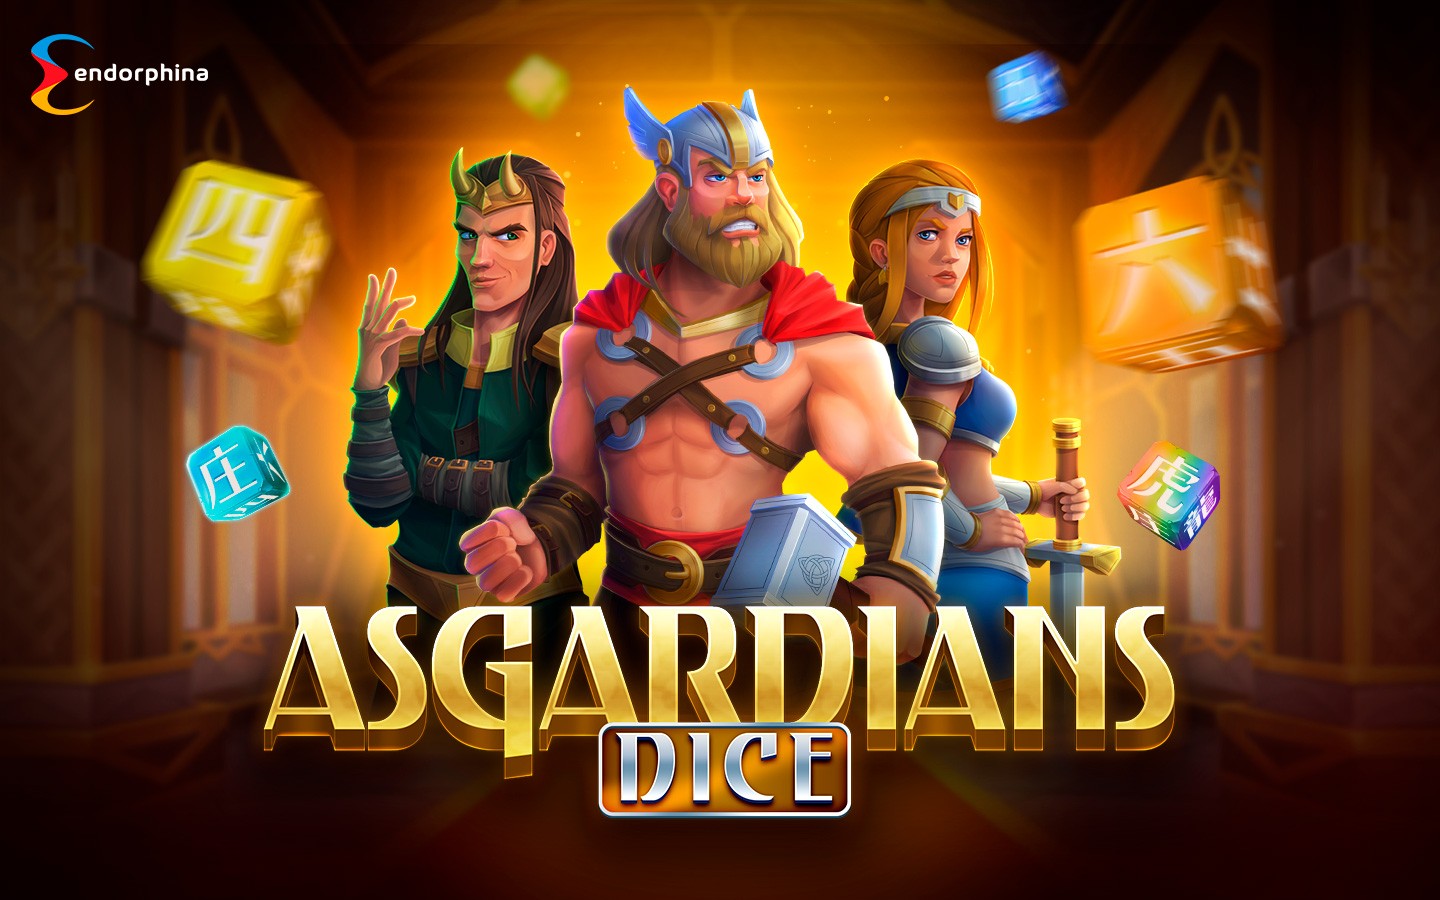 Play Asgardians slot machine